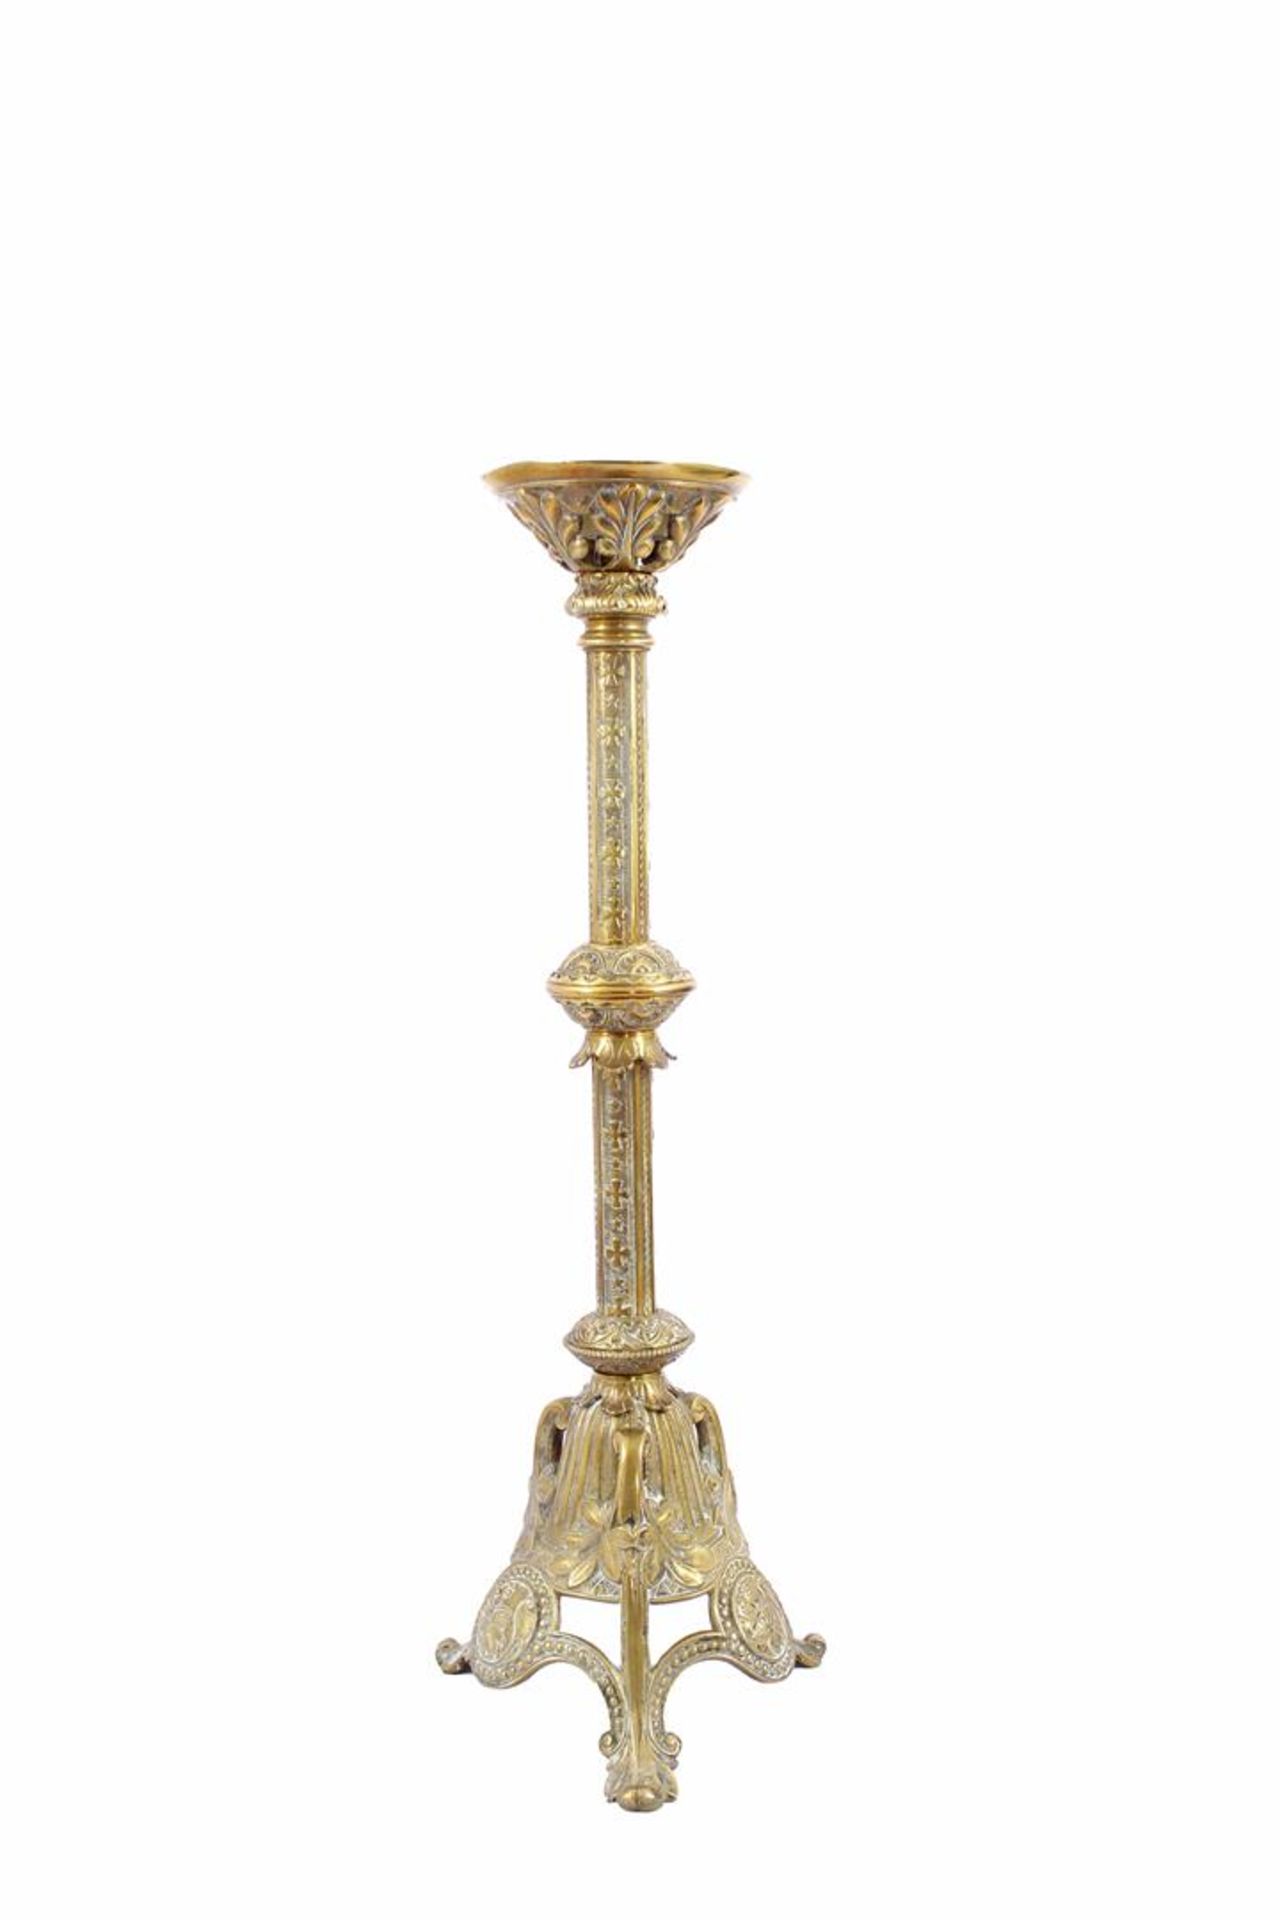 Brass decorated pen candlestick 61 cm high